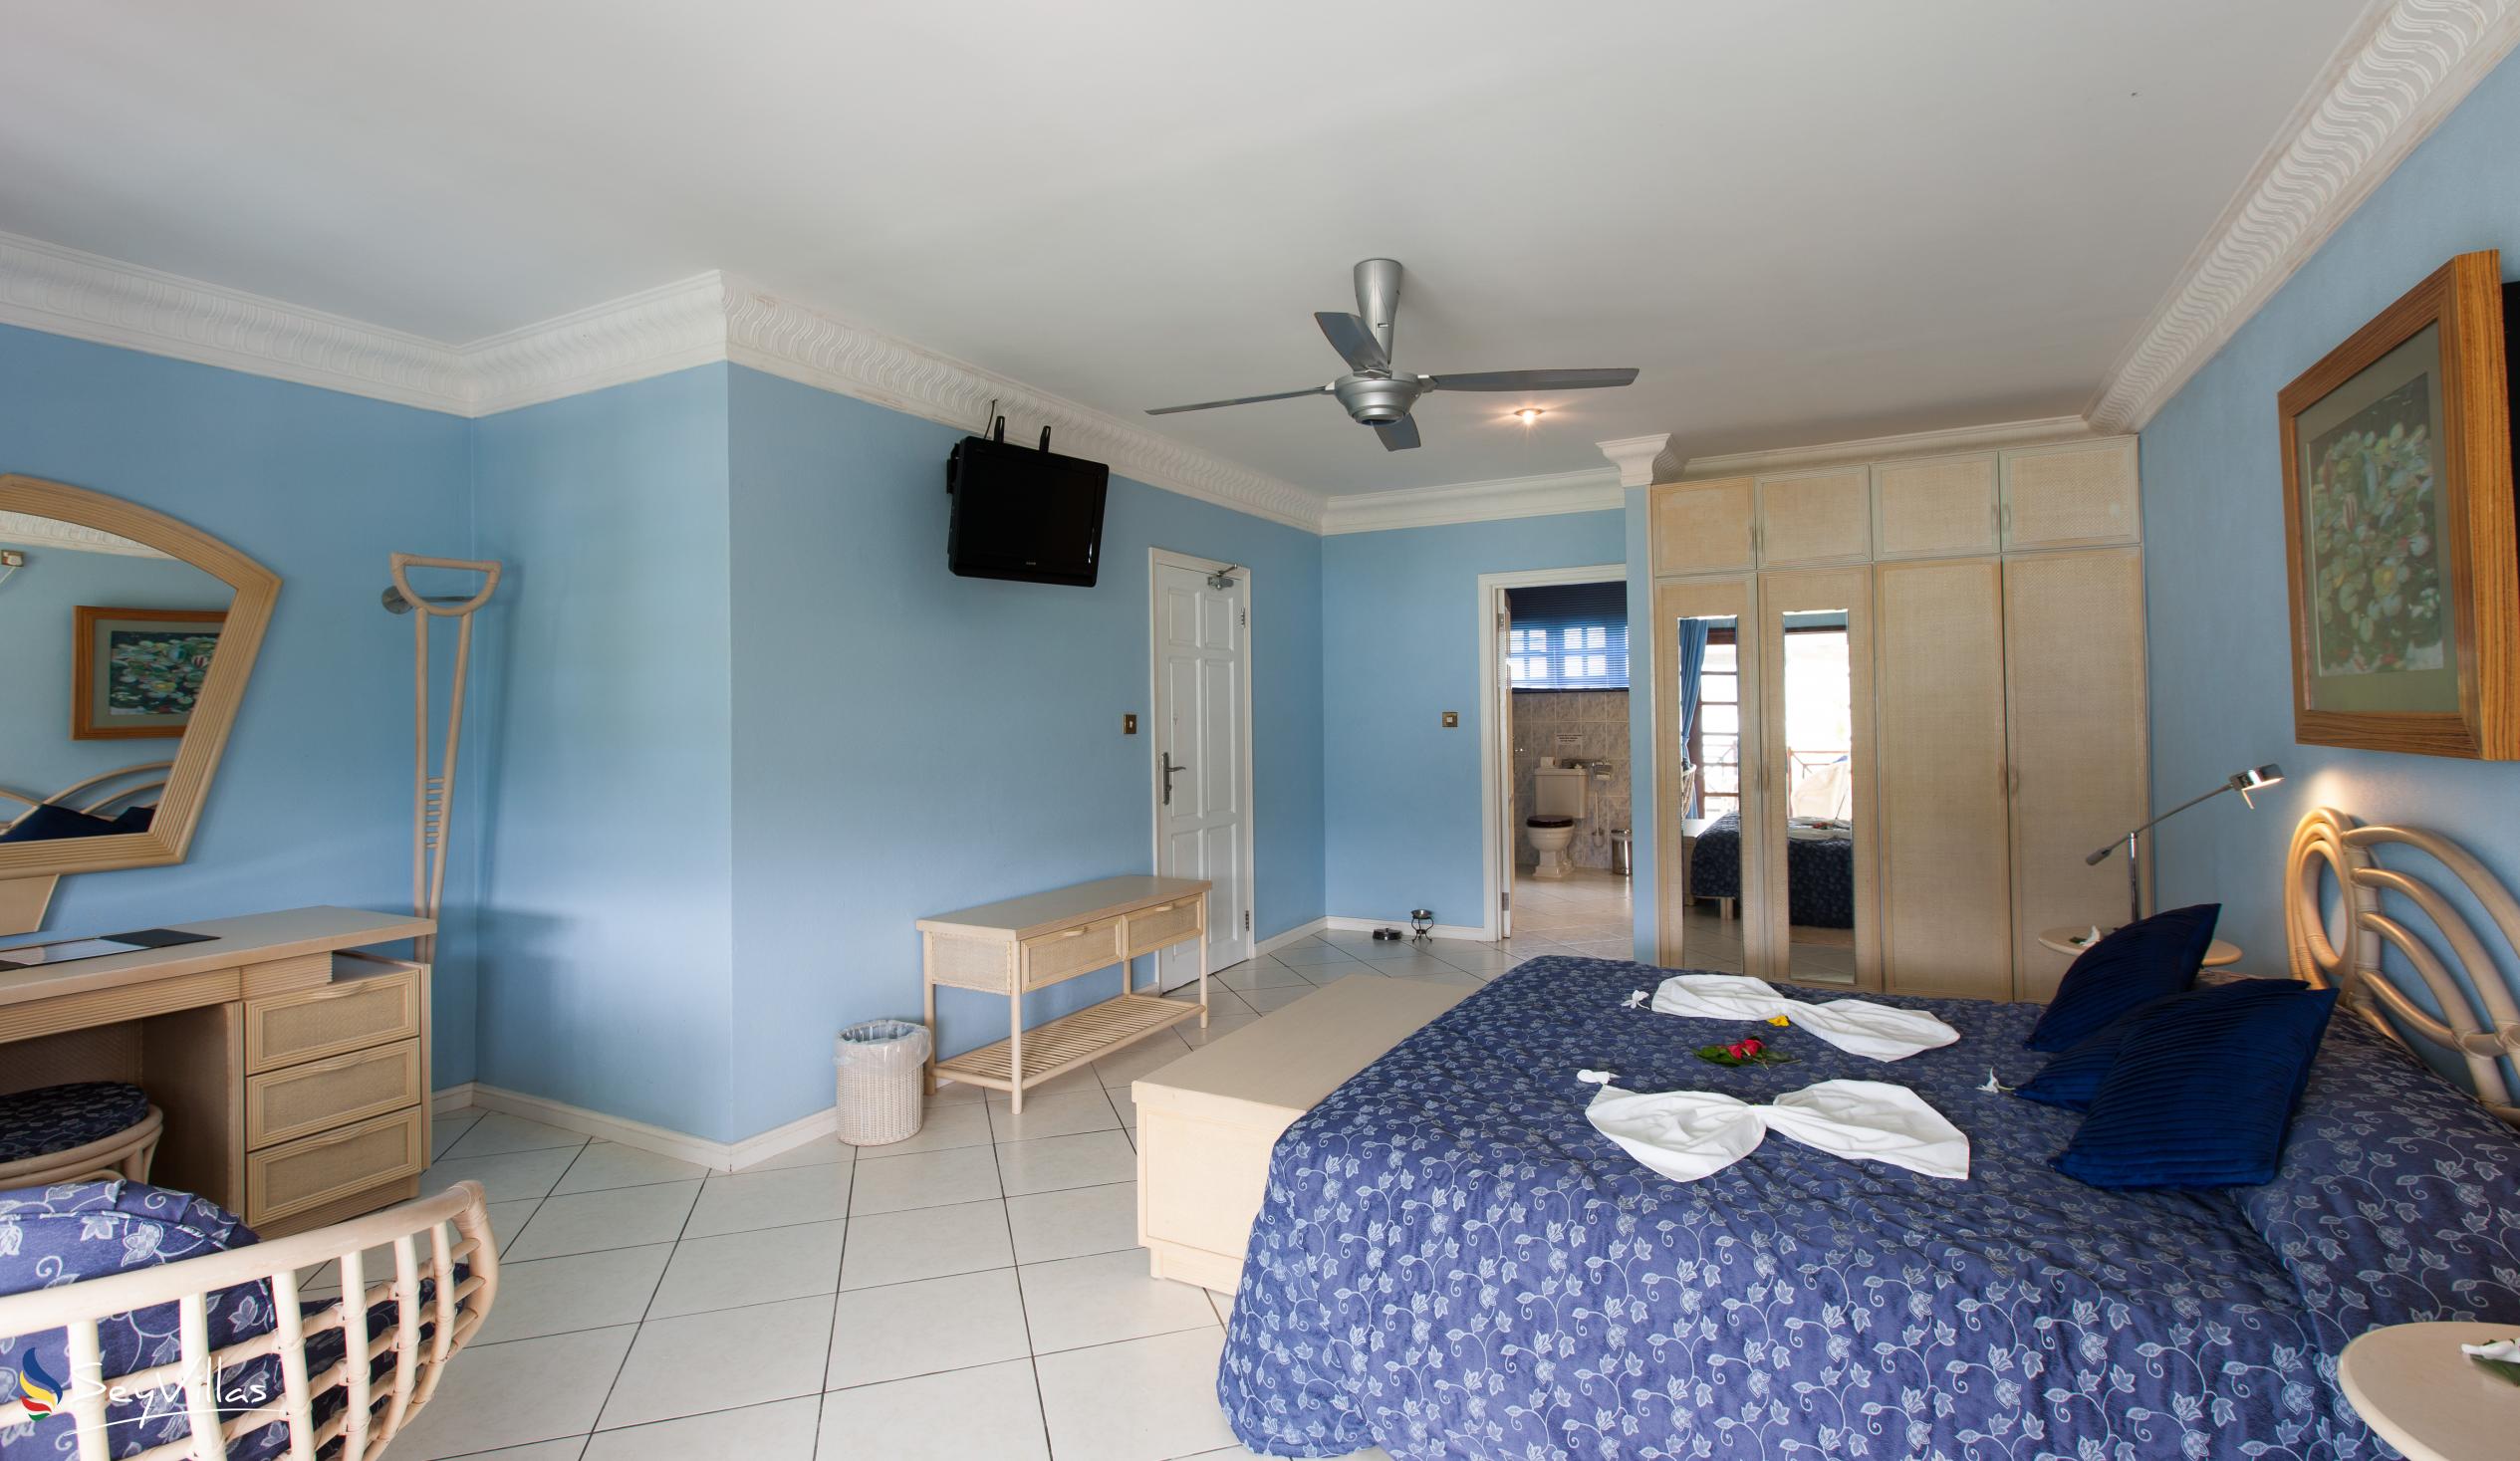 Photo 60: Villa de Cerf - Double Room - Cerf Island (Seychelles)